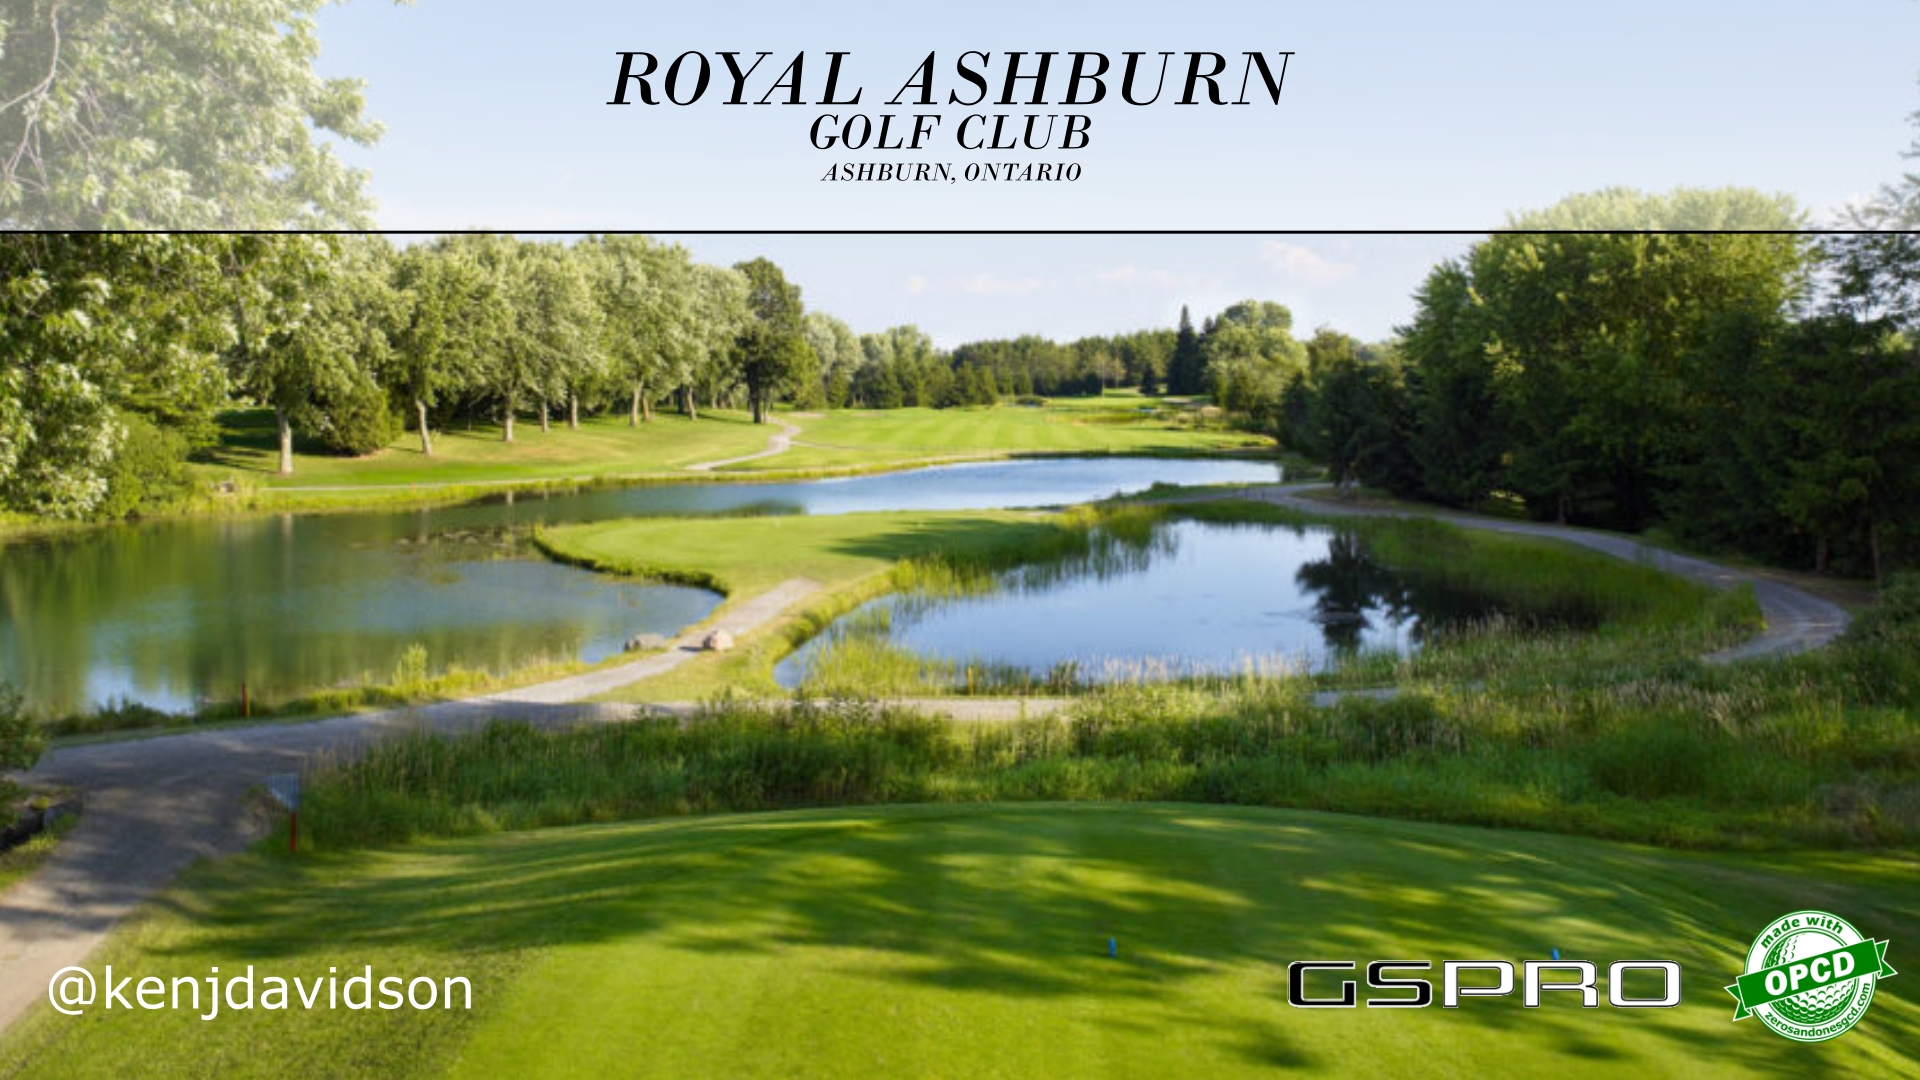 Royal Ashburn Golf Club splash image